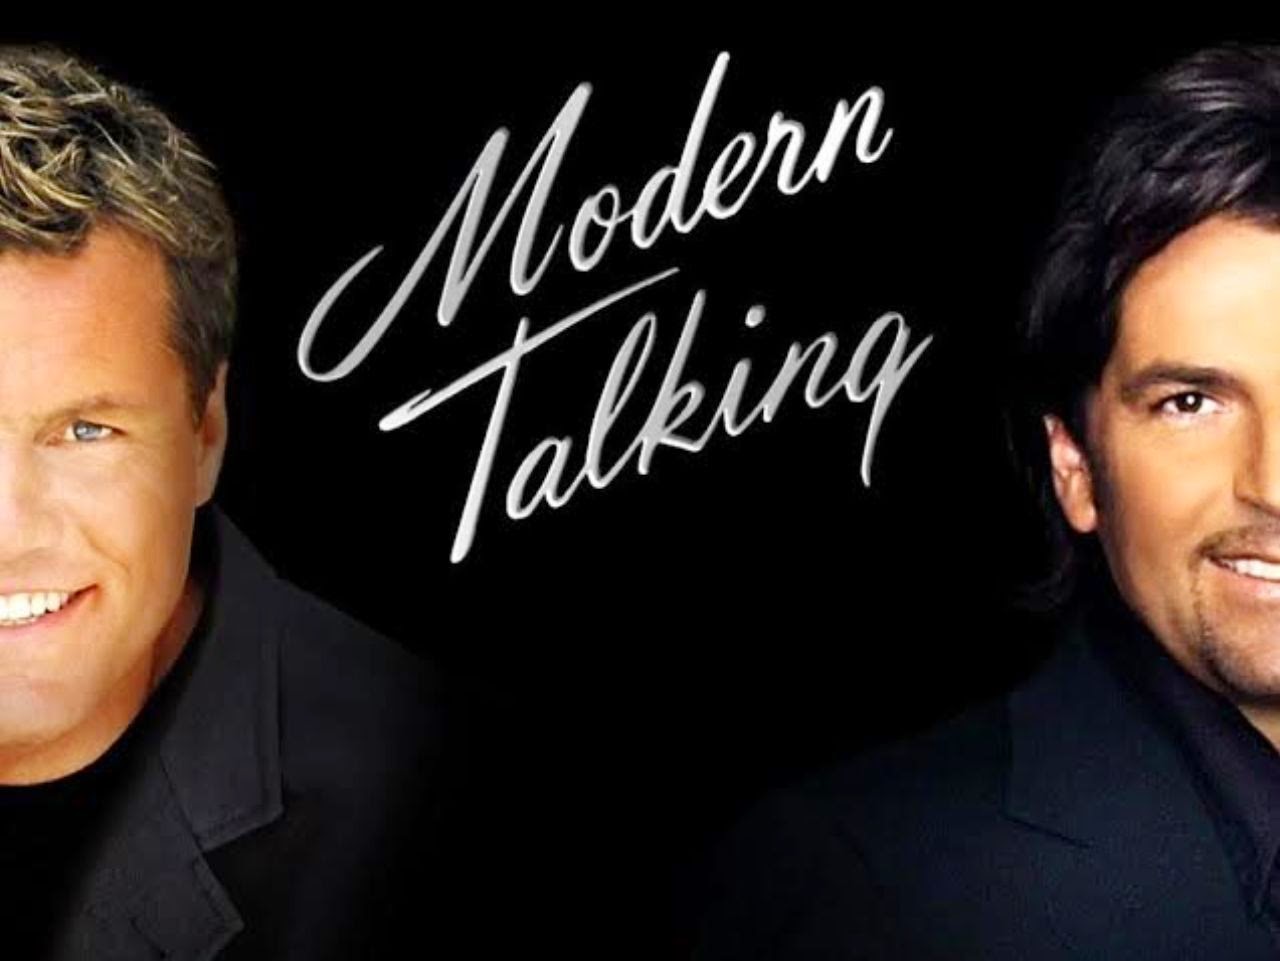 Модерн токинг слушать современное. Группа Modern talking. Modern talking 1996. Солист Модерн токинг. Группа Modern talking 2021.